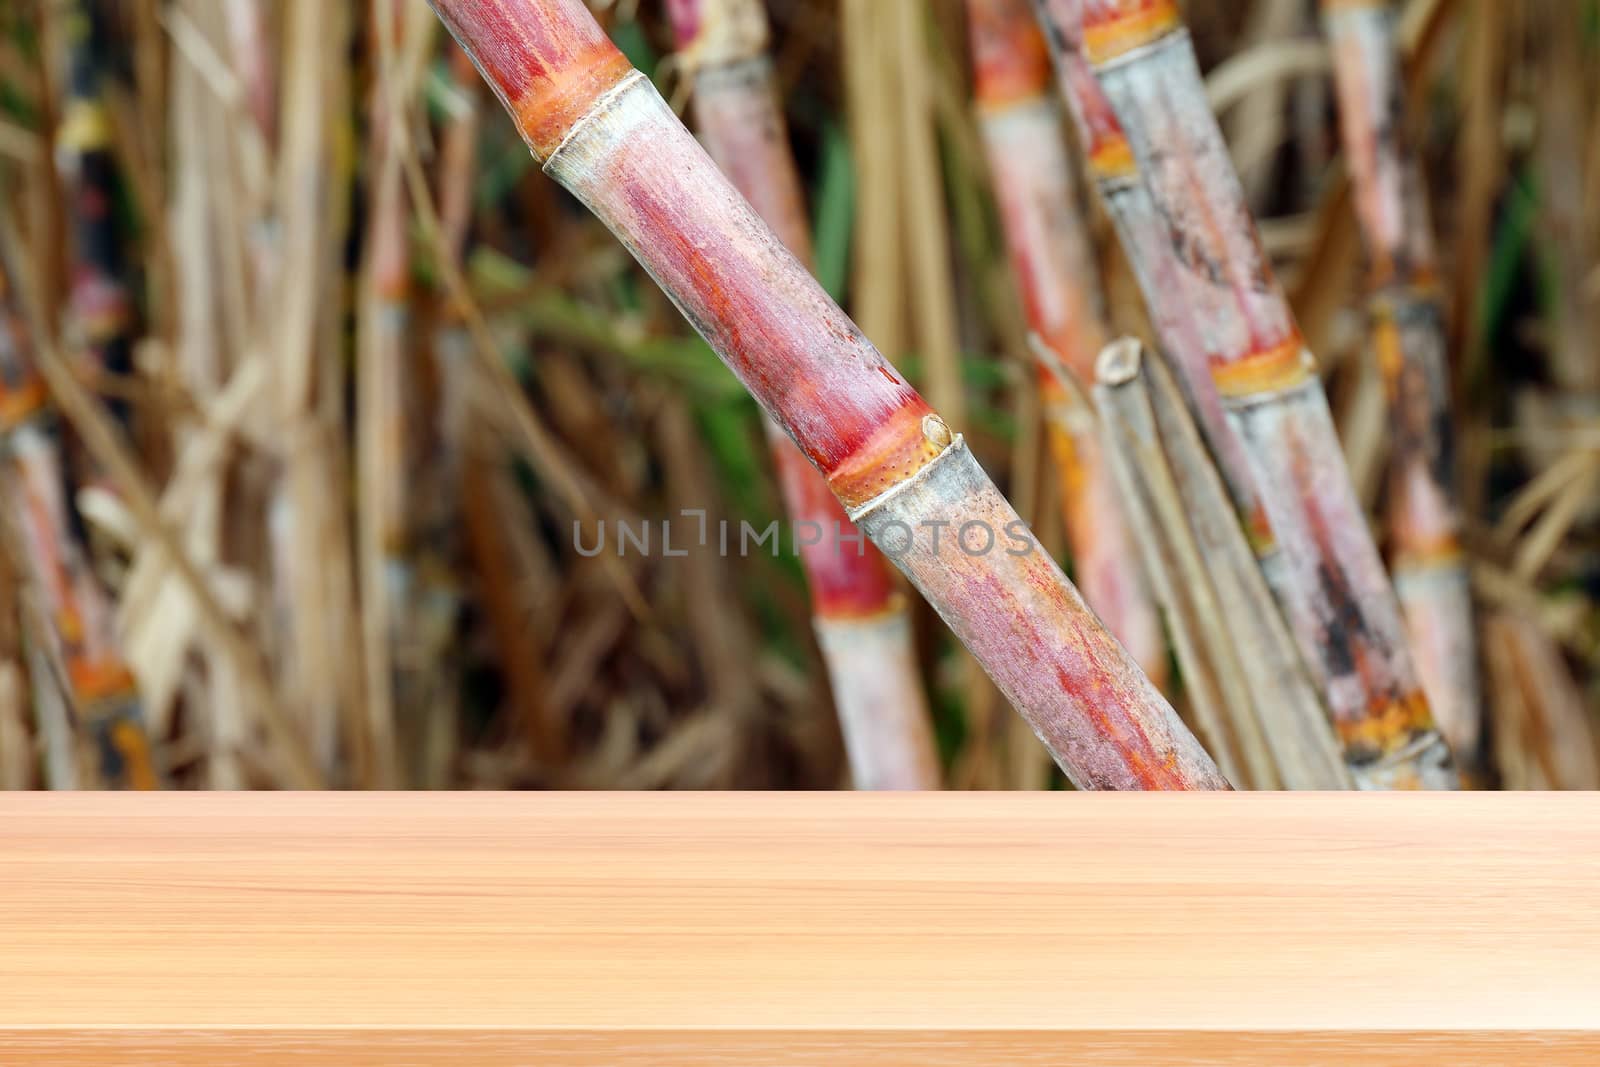 wood plank on sugarcane fresh plantation background, empty wood table floors on sugar cane farm, wood table board empty front sugarcane for mock up display products sugar cane juice molasses